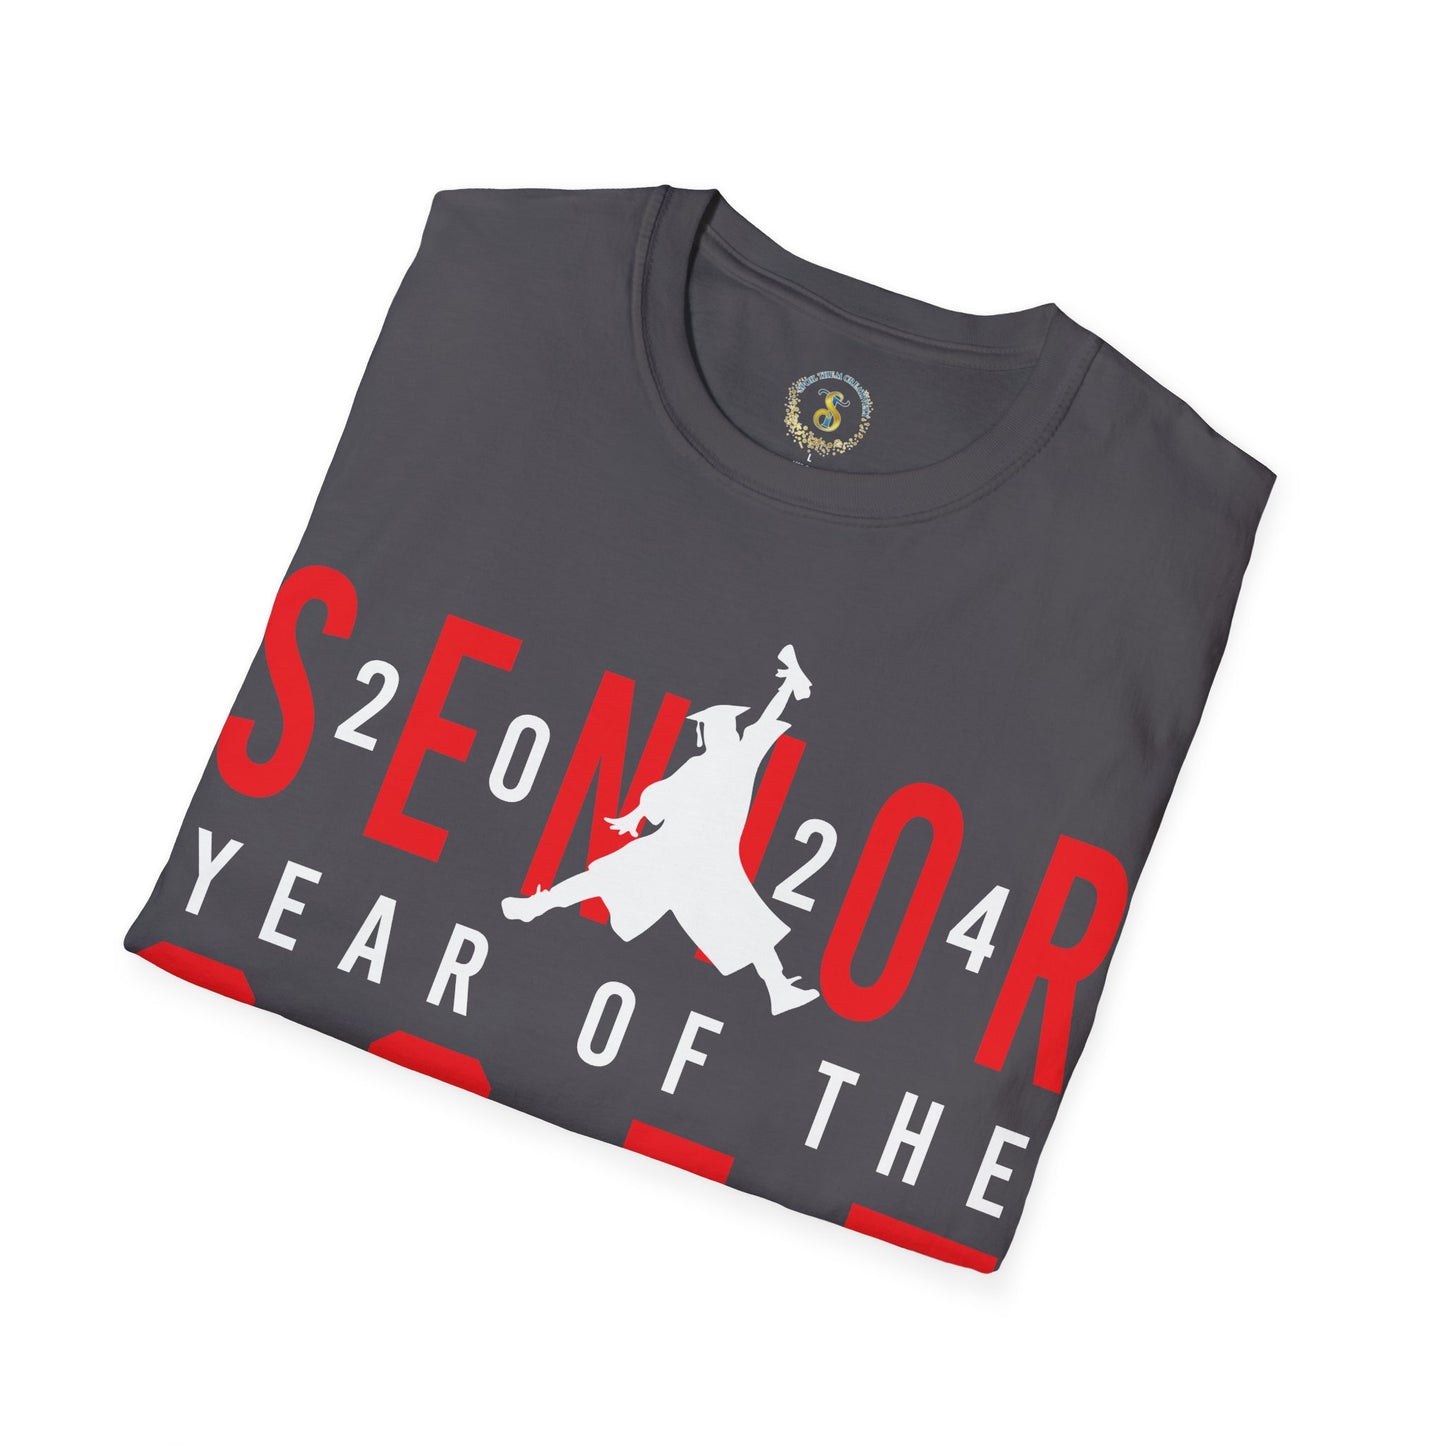 Senior | Year of the GOAT T-Shirt